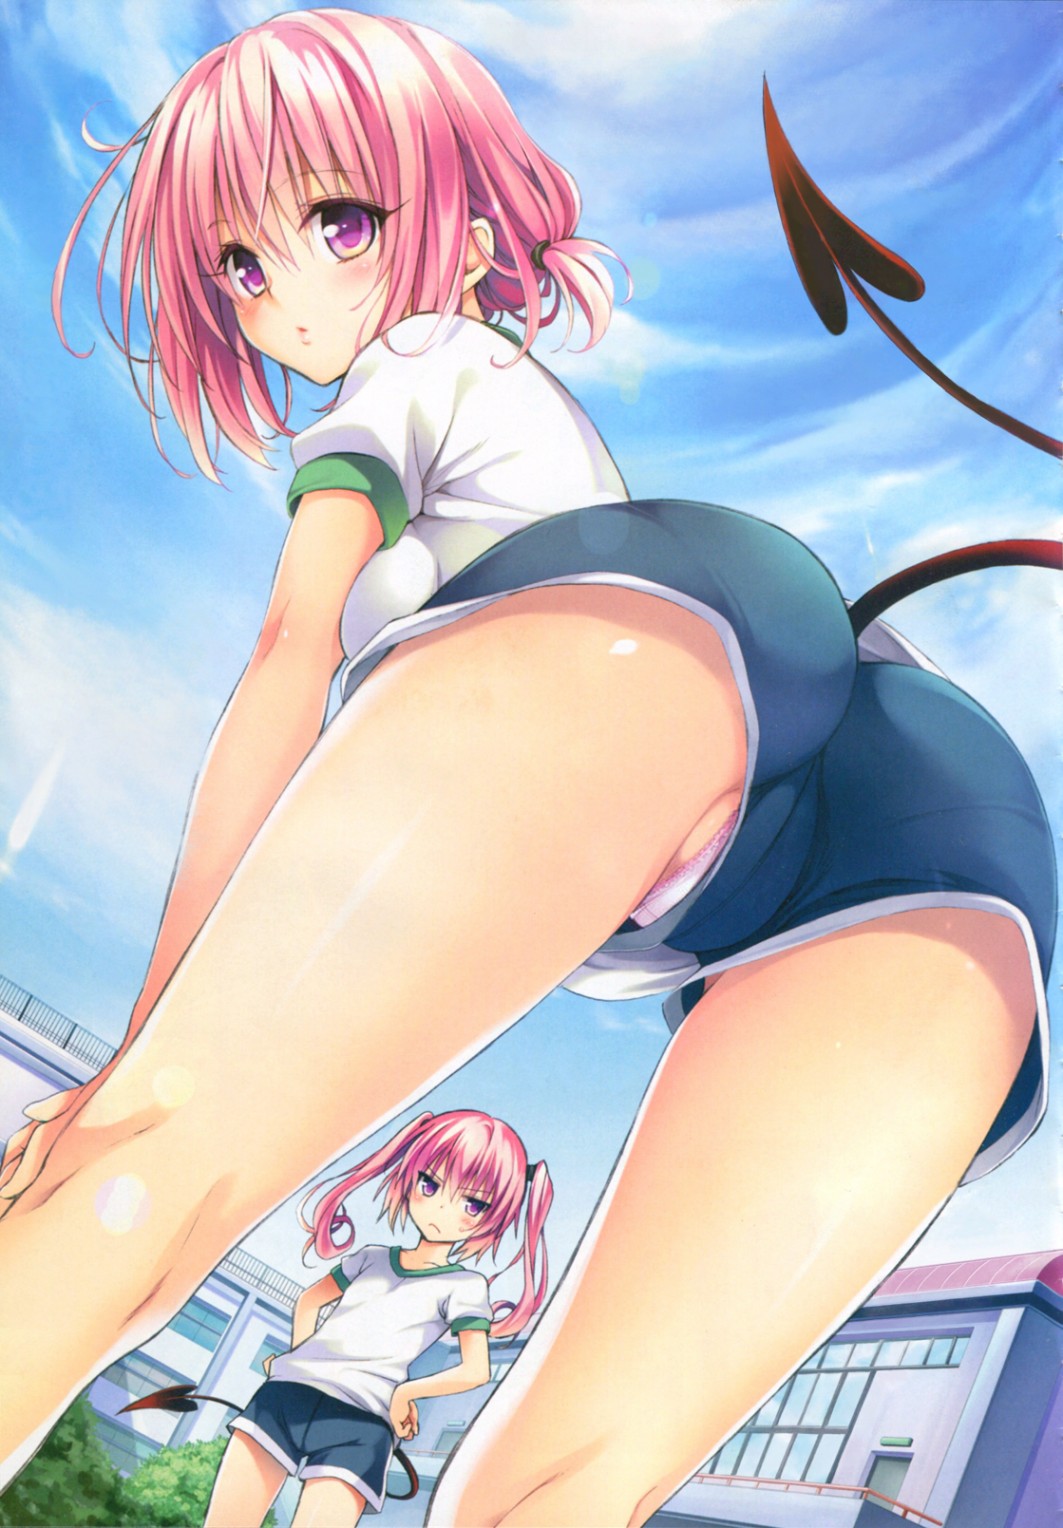 Anime schoolgirl with tail pov upskirt up shorts panties ...